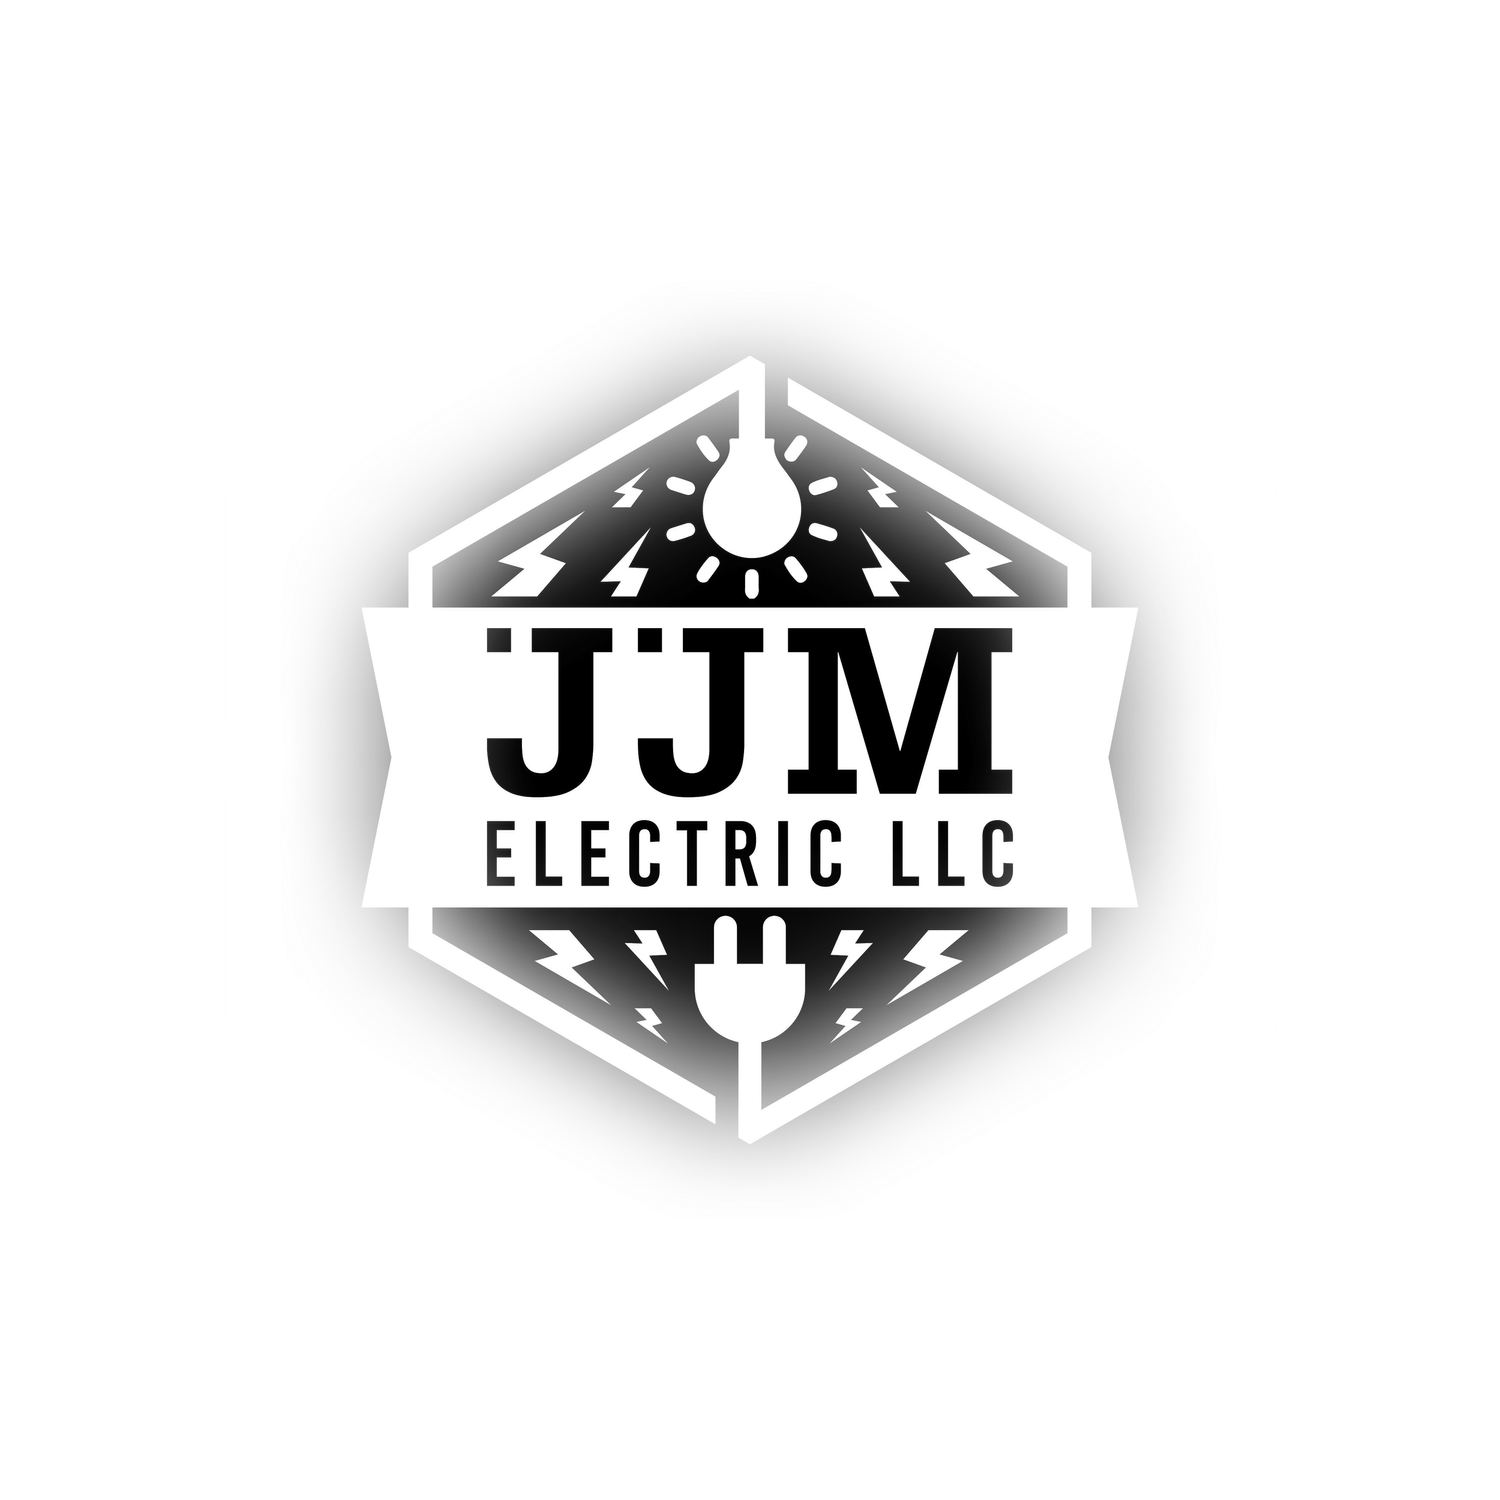 JJM ELECTRIC LLC